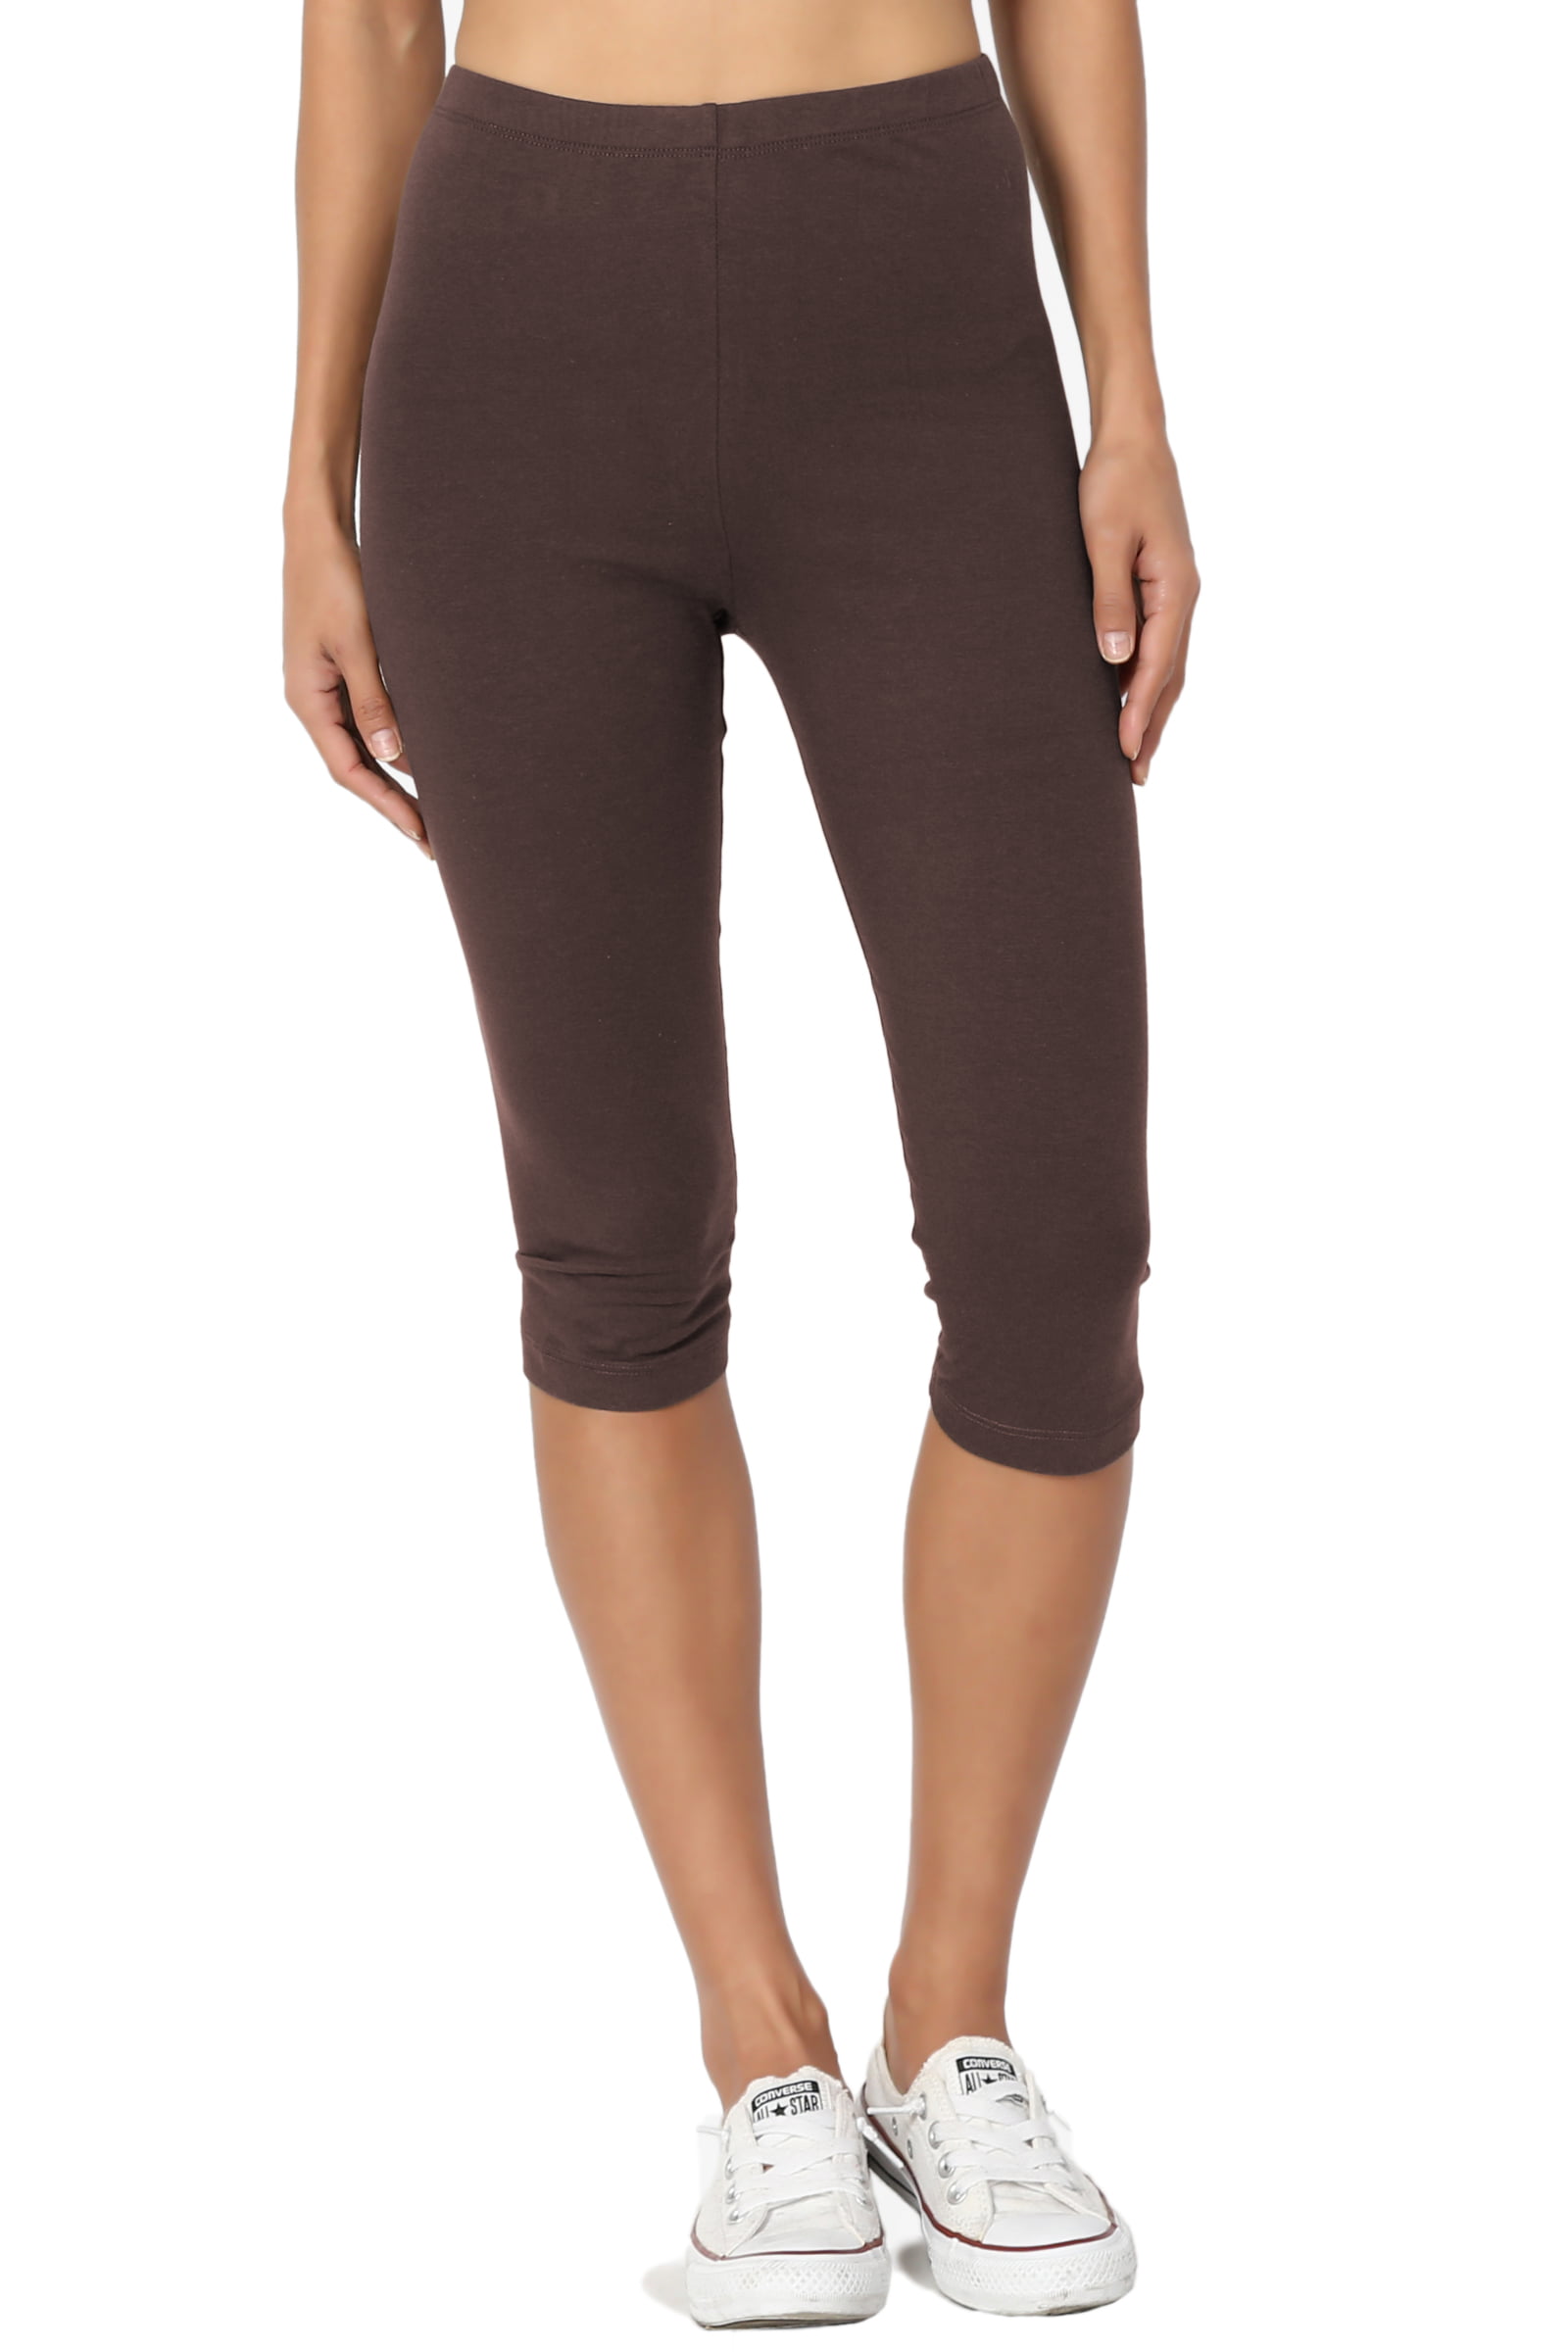 🛍 bundles only Adrienne vittadini Capri leggings | Capri leggings, Leggings  shop, Clothes design